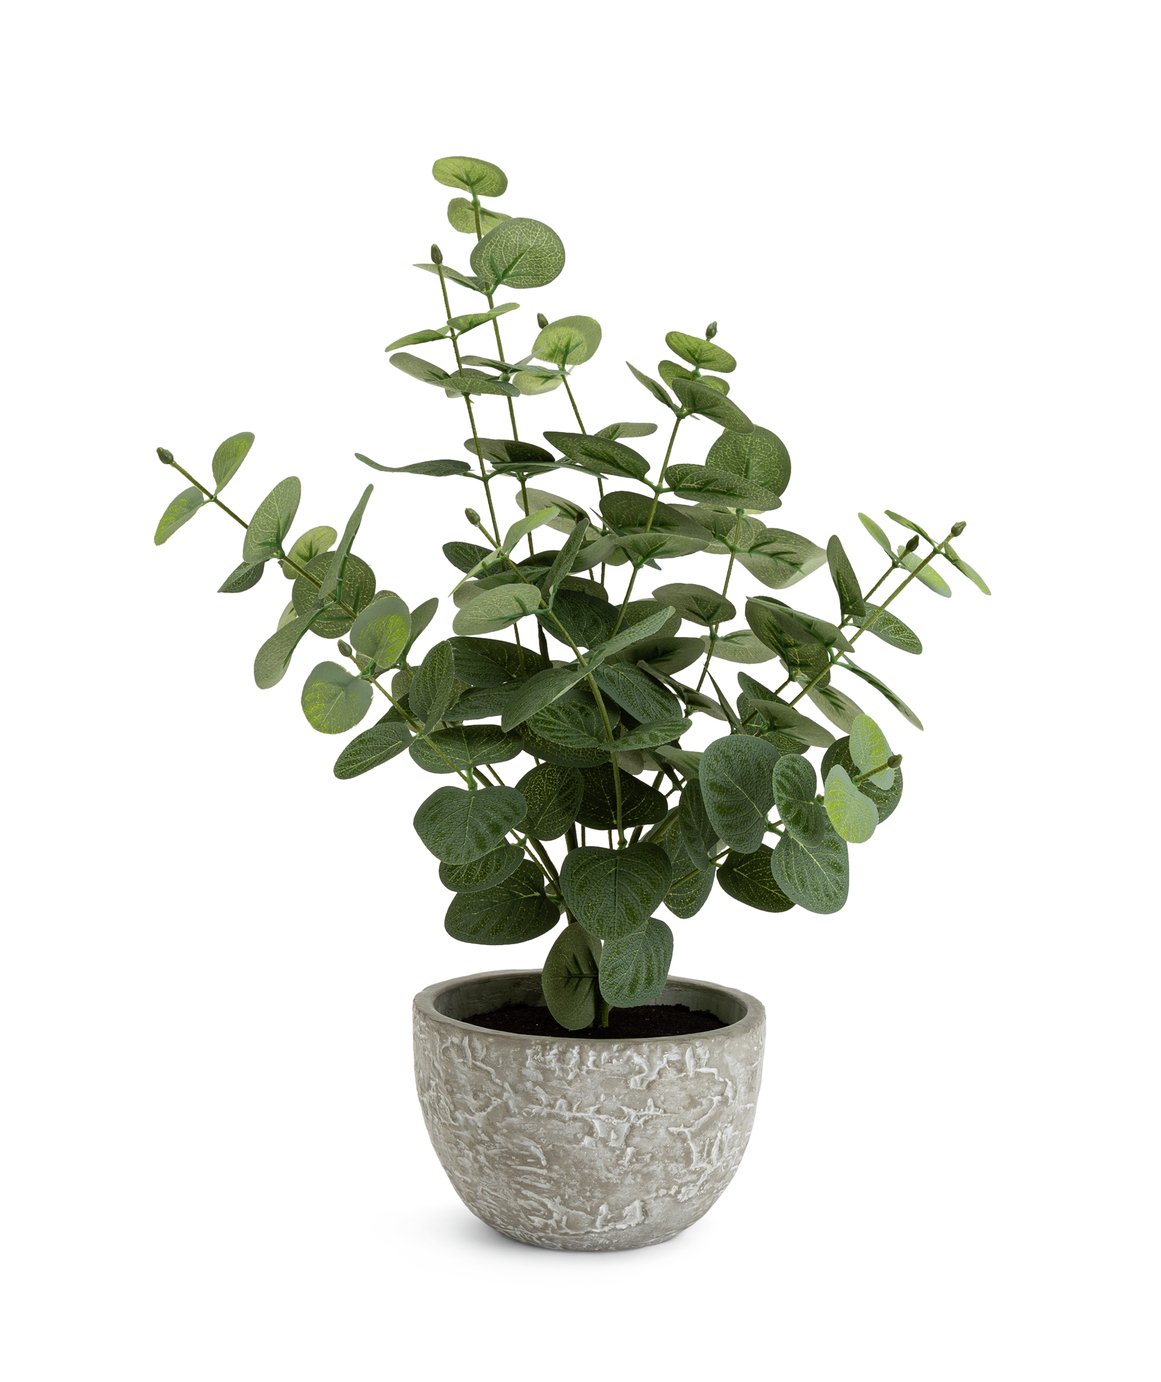 Habitat Artificial Eucalyptus Plant in Grey Pot